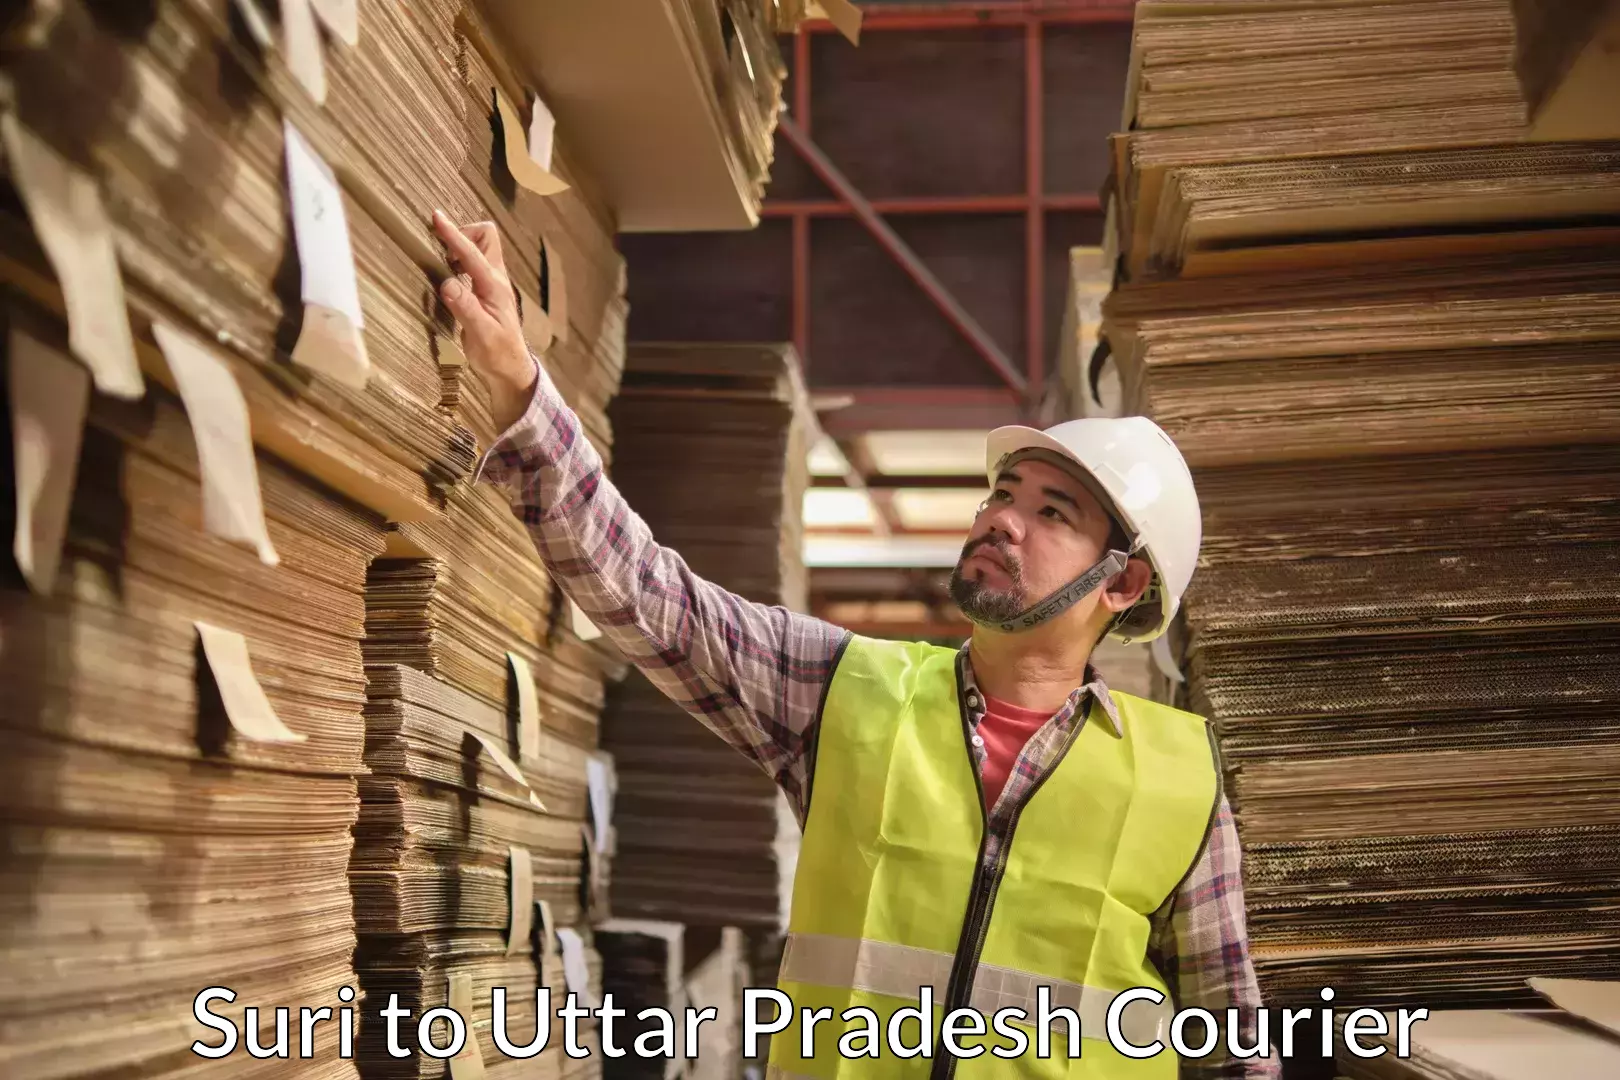 Moving and packing experts Suri to Uttar Pradesh